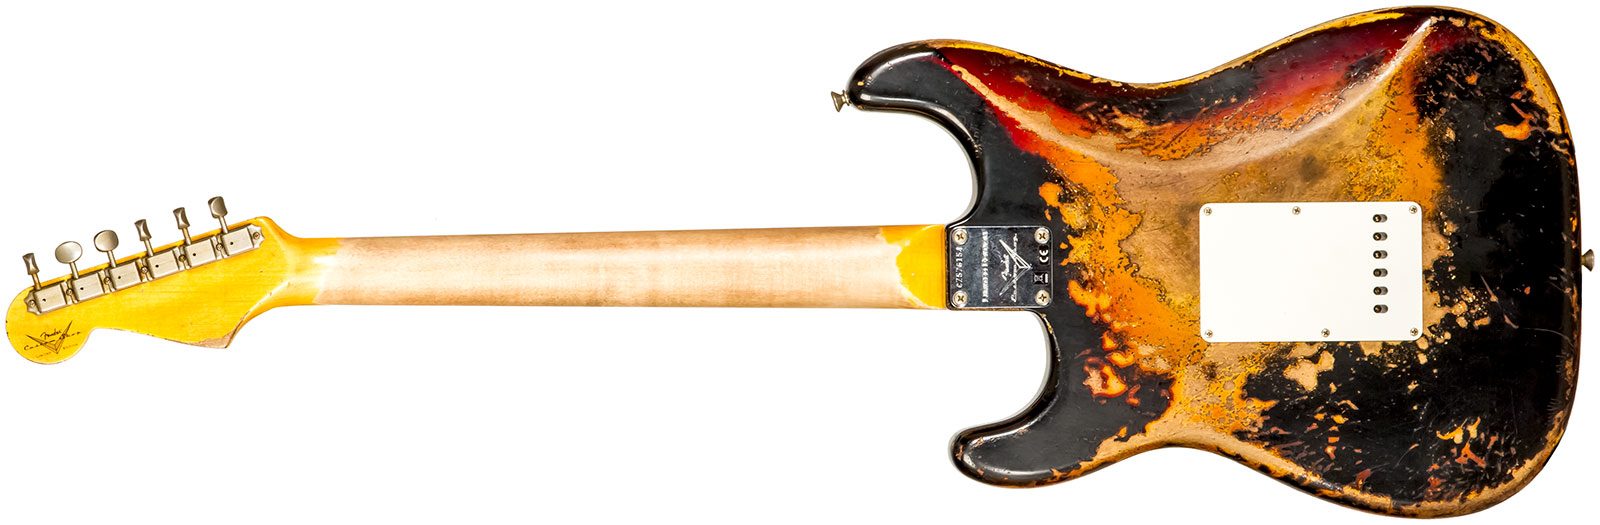 Fender Custom Shop Strat 1959 3s Trem Rw #cz576154 - Super Heavy Relic Black O. 3-color Sunburst - Str shape electric guitar - Variation 1